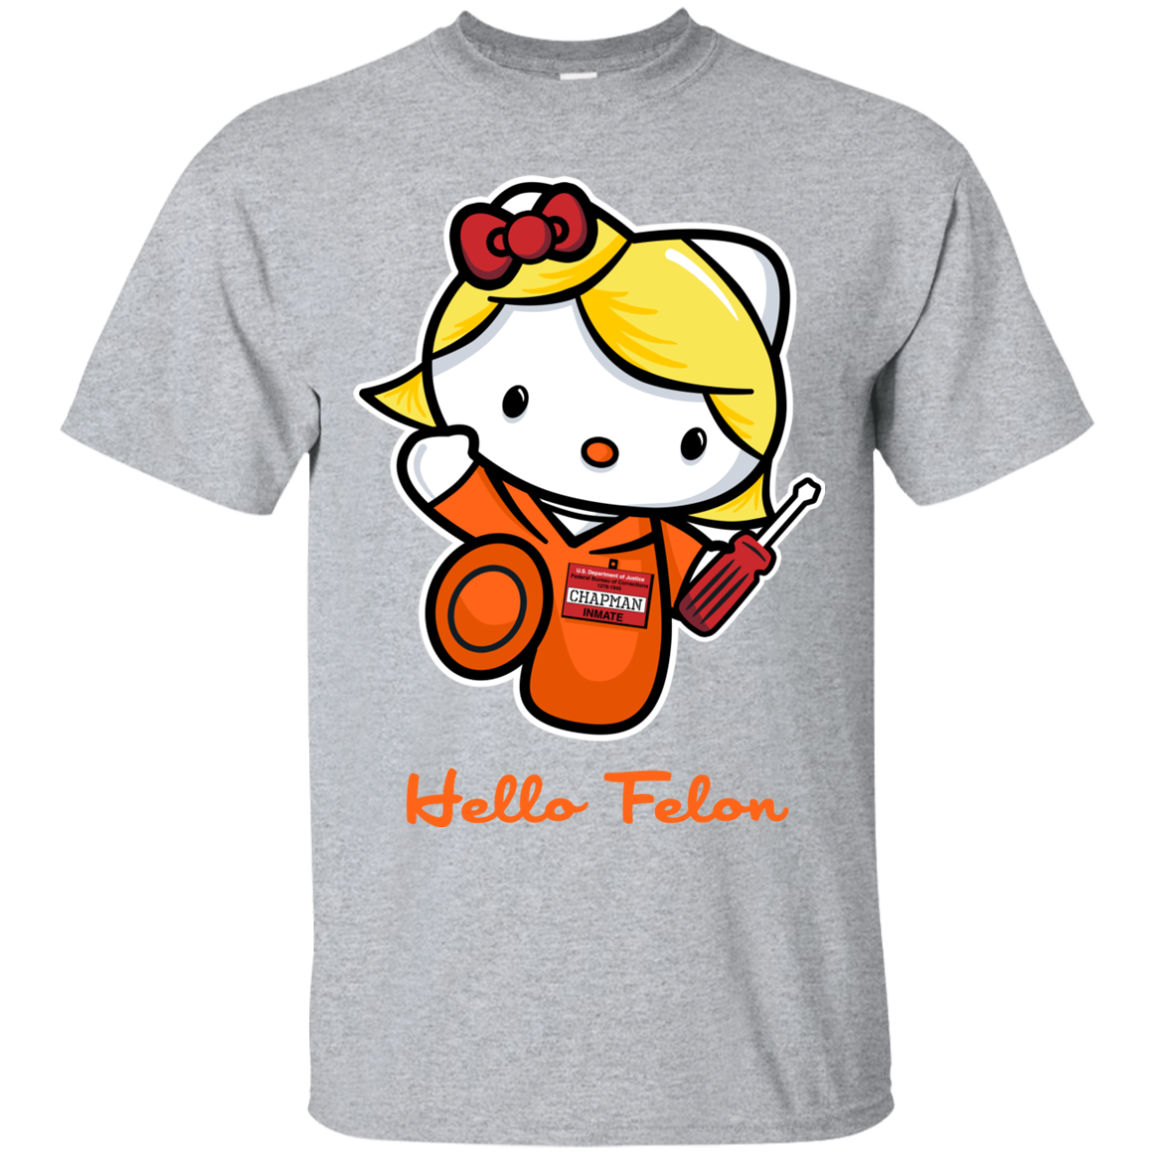 Orange is the New Cat T-Shirt